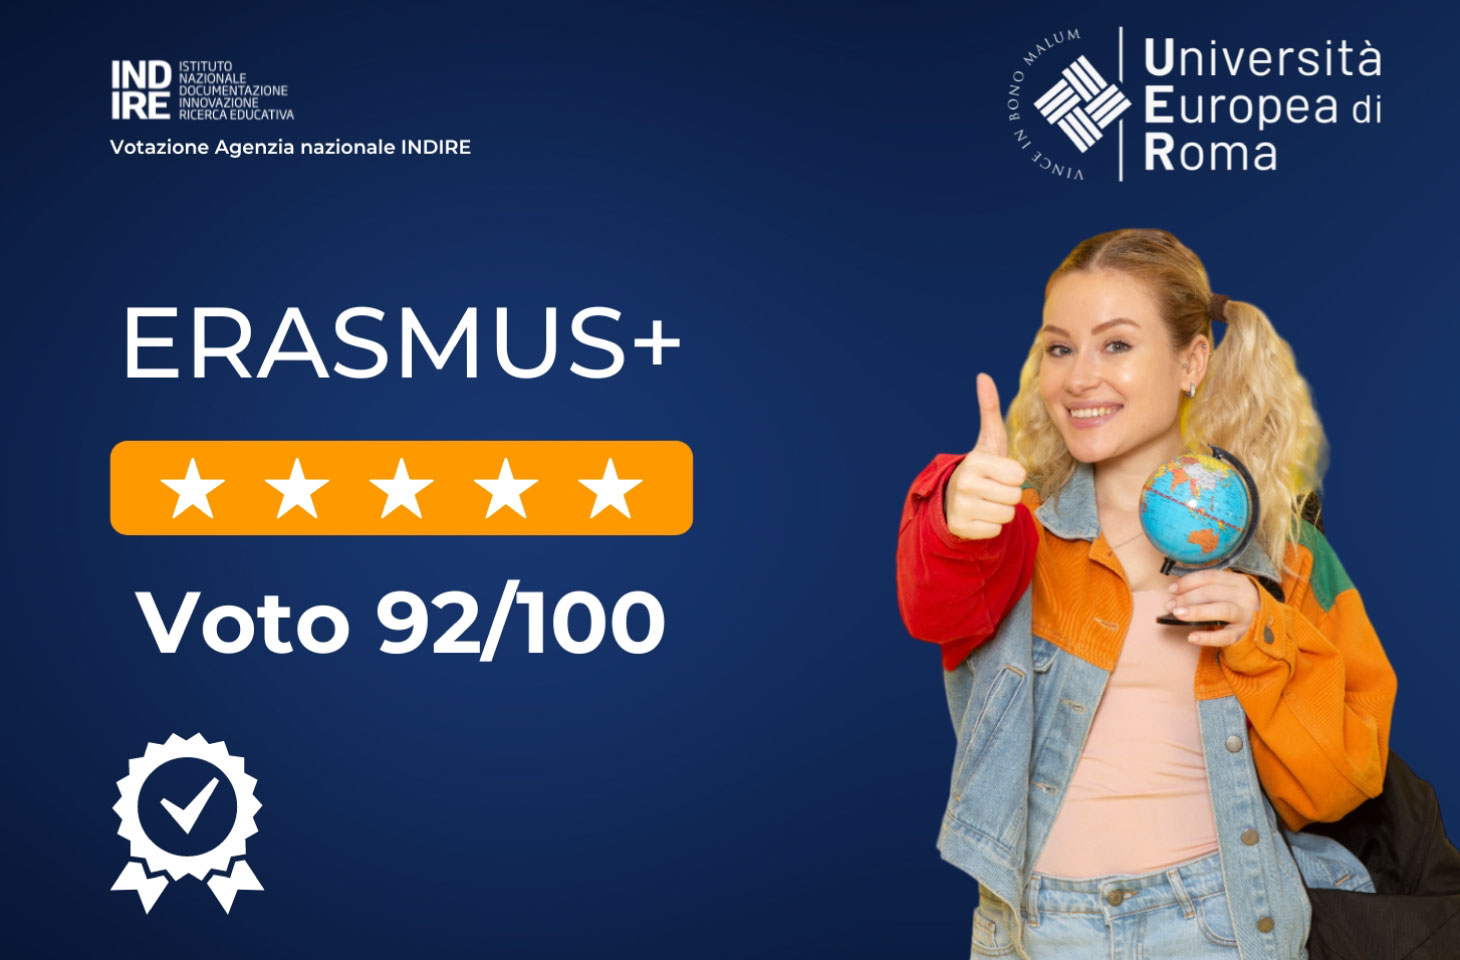 Punteggio 92 su 100 per UER nel Programma Erasmus +